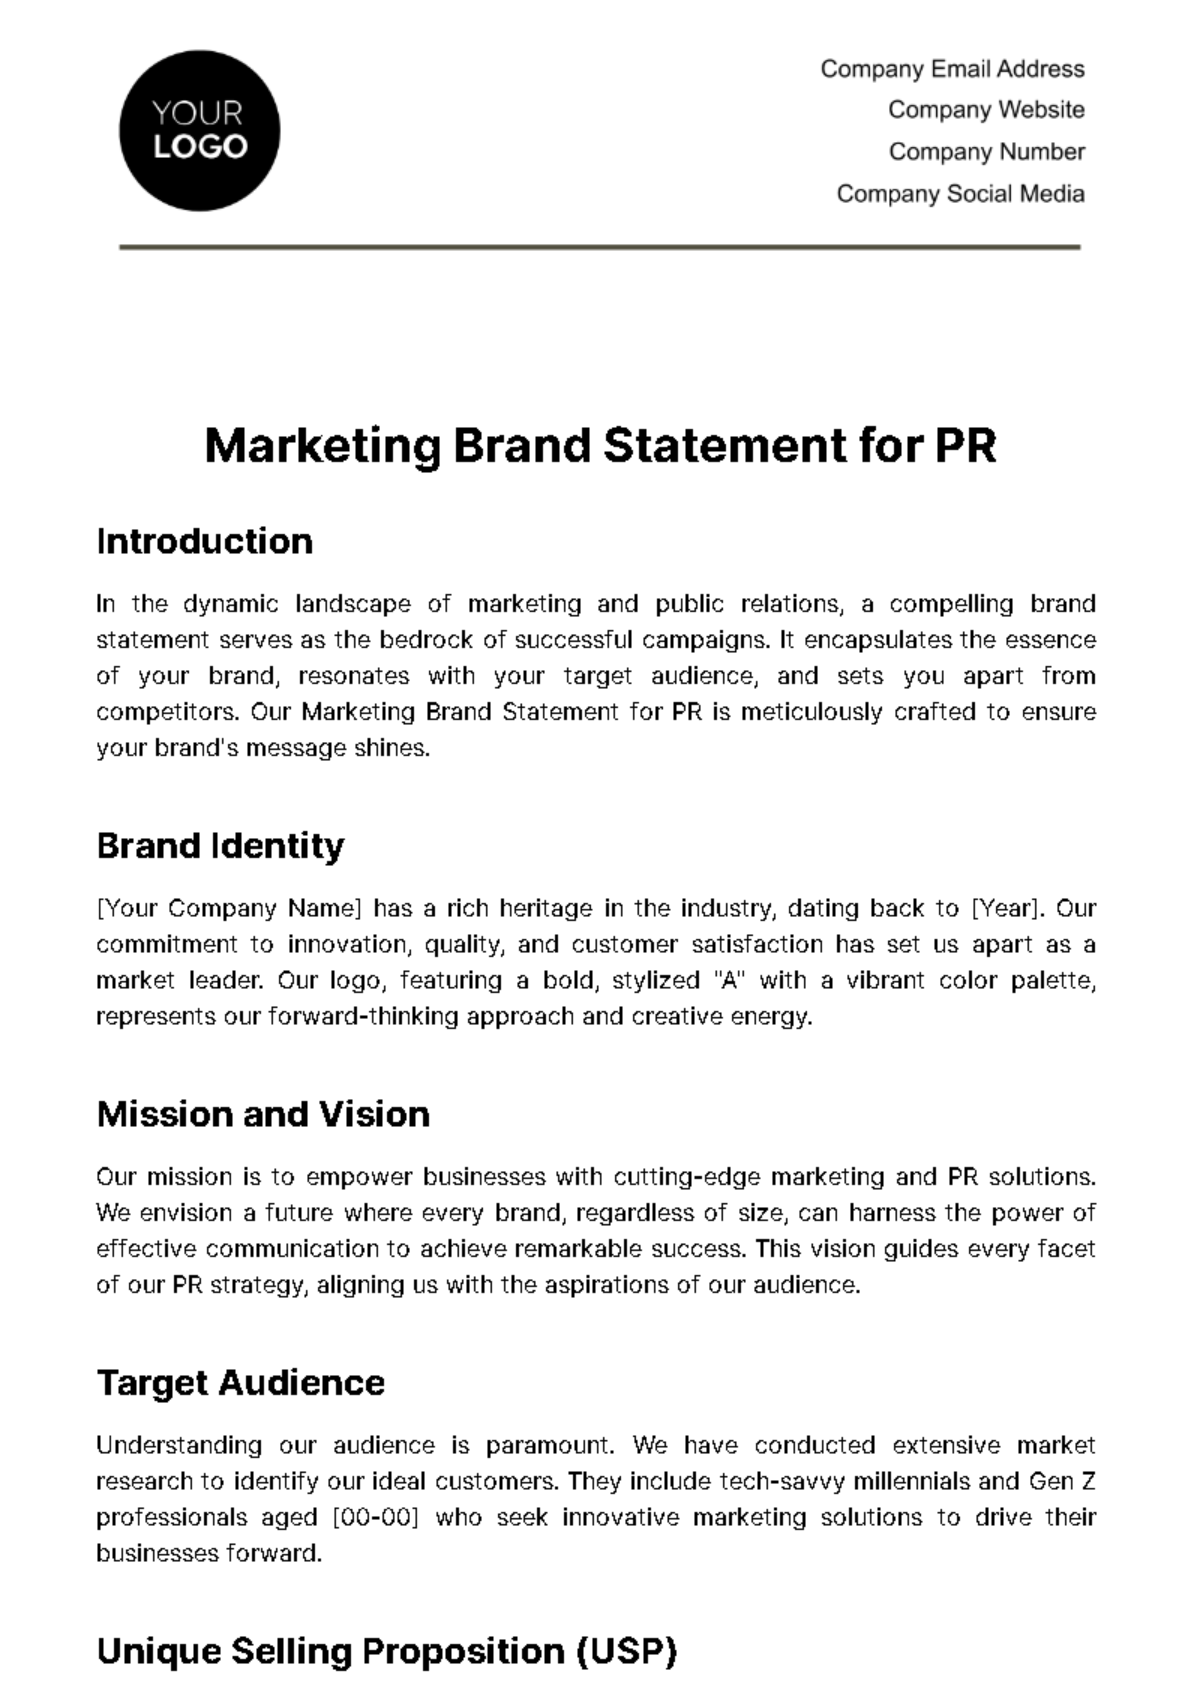 Free Marketing Brand Statement for PR Template